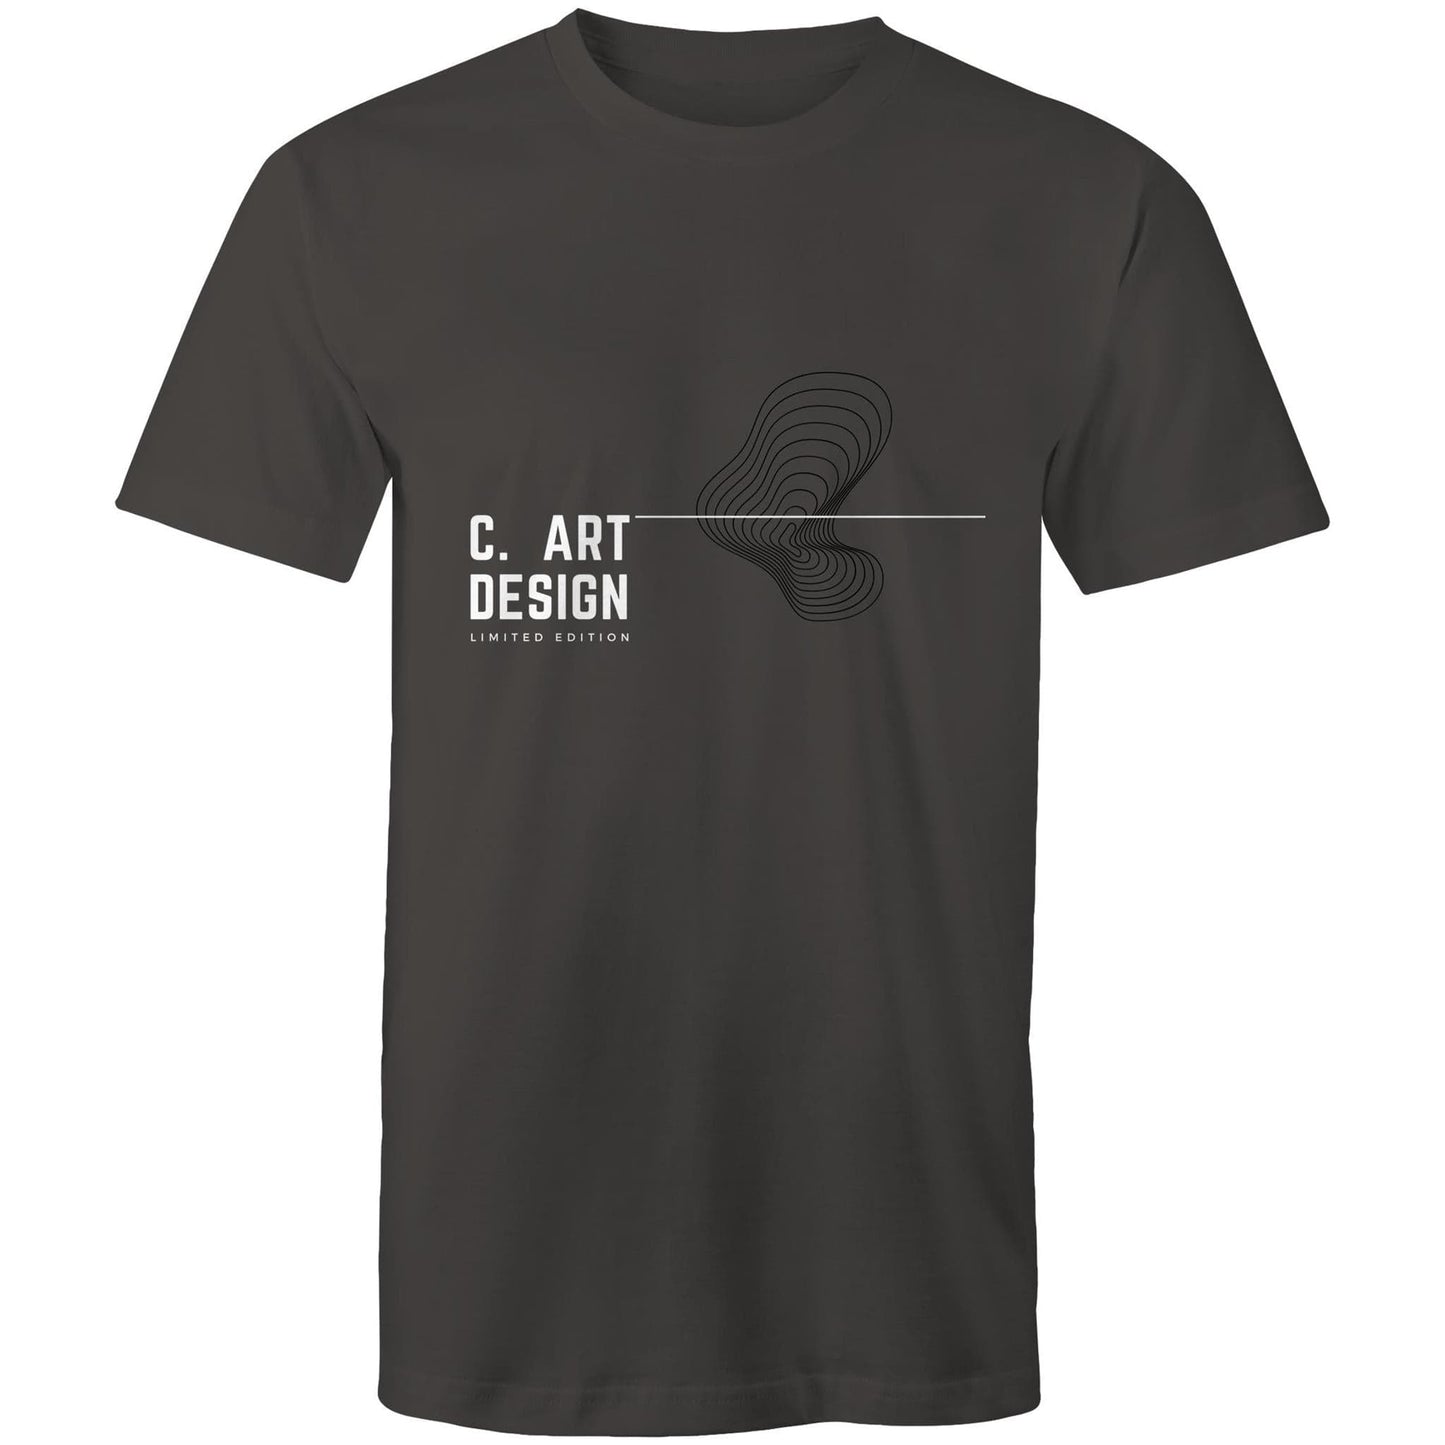 Charcoal / Small C. Art Design - Asymmetric Limited Edition T-Shirt